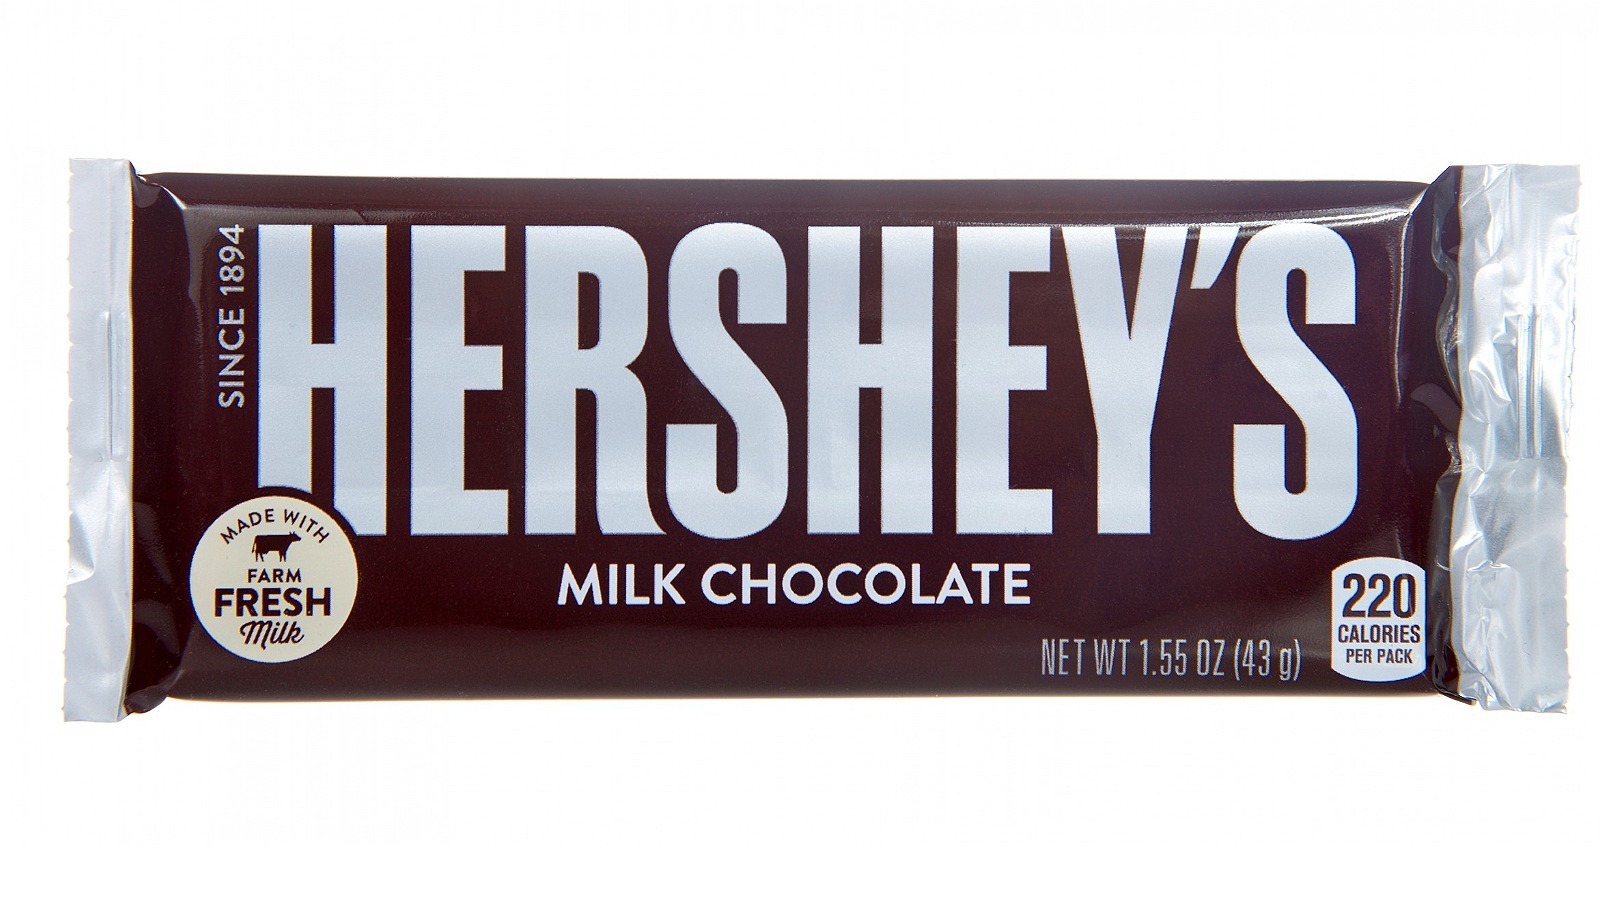 advertisements for hersheys chocolate